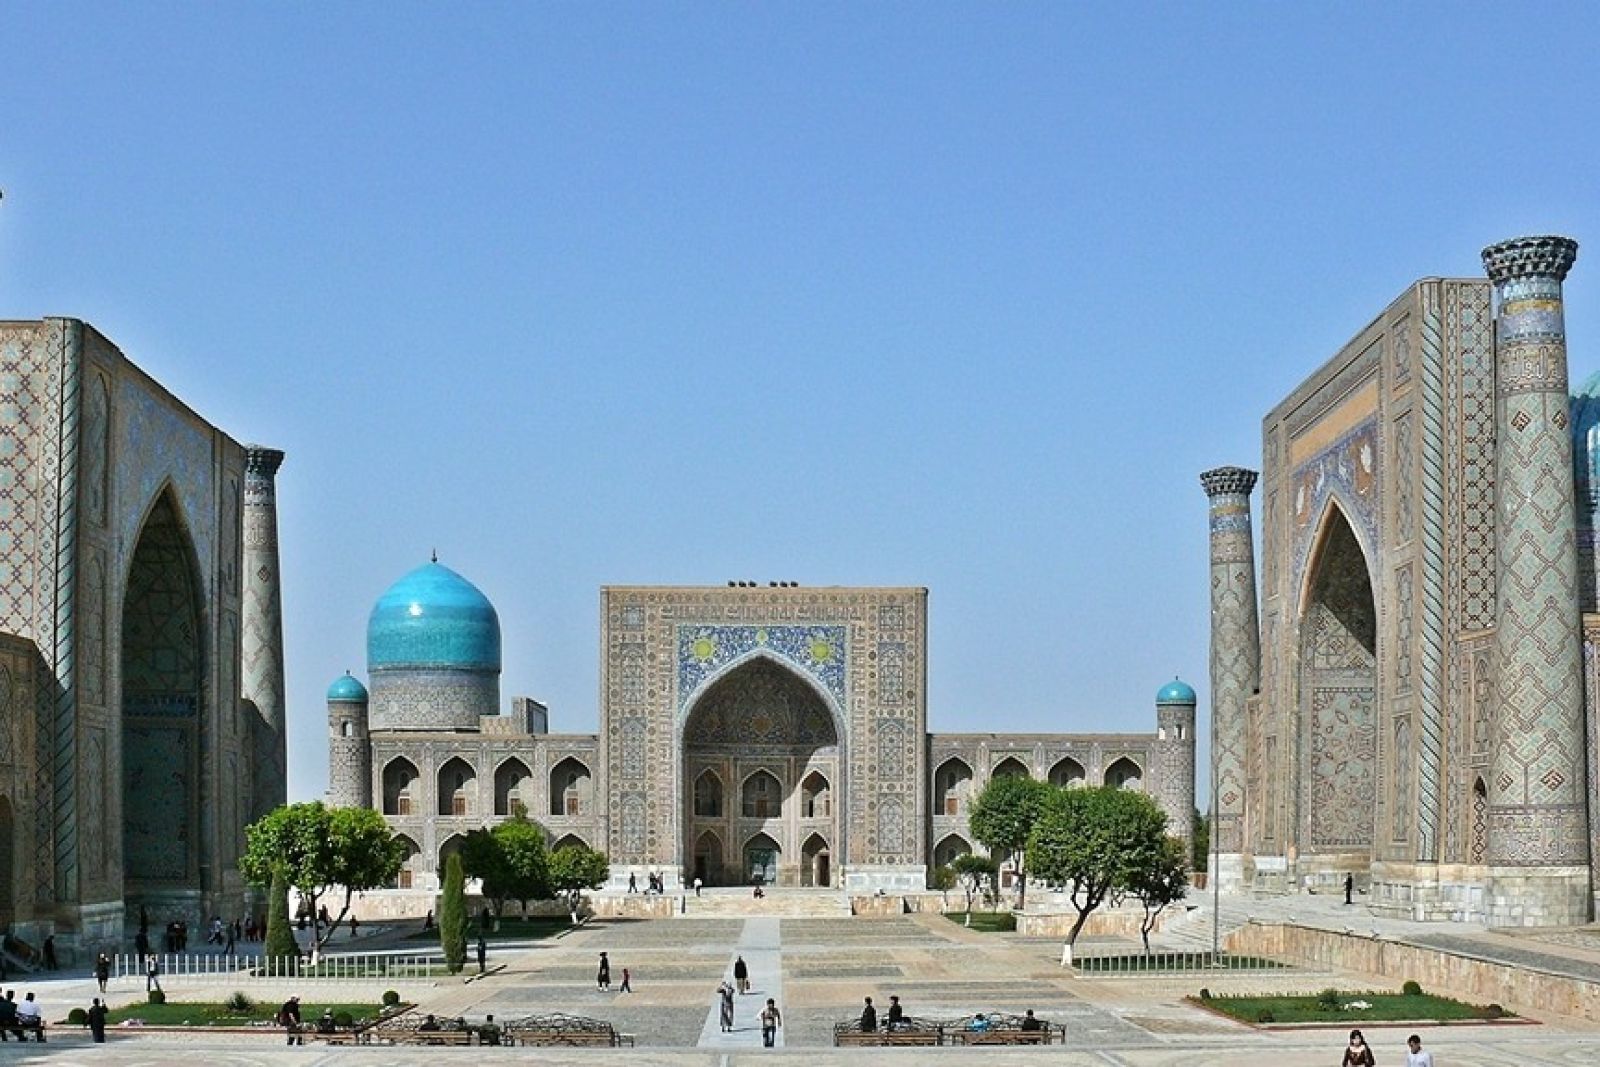 Samarkand Registan